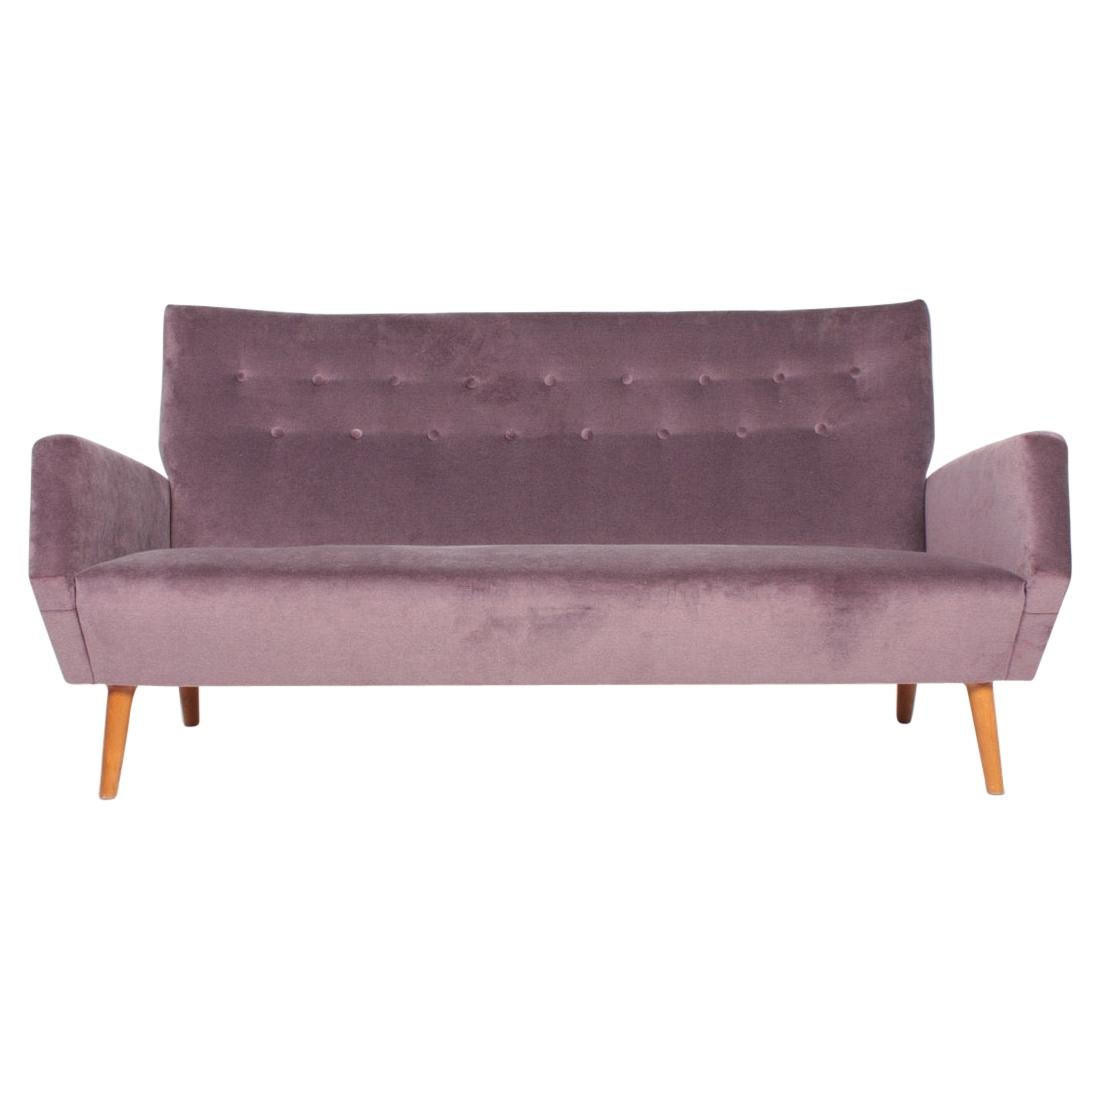 Midcentury Sofa in French Velvet by Gio Ponti, Italy, Modern Design, 1950s